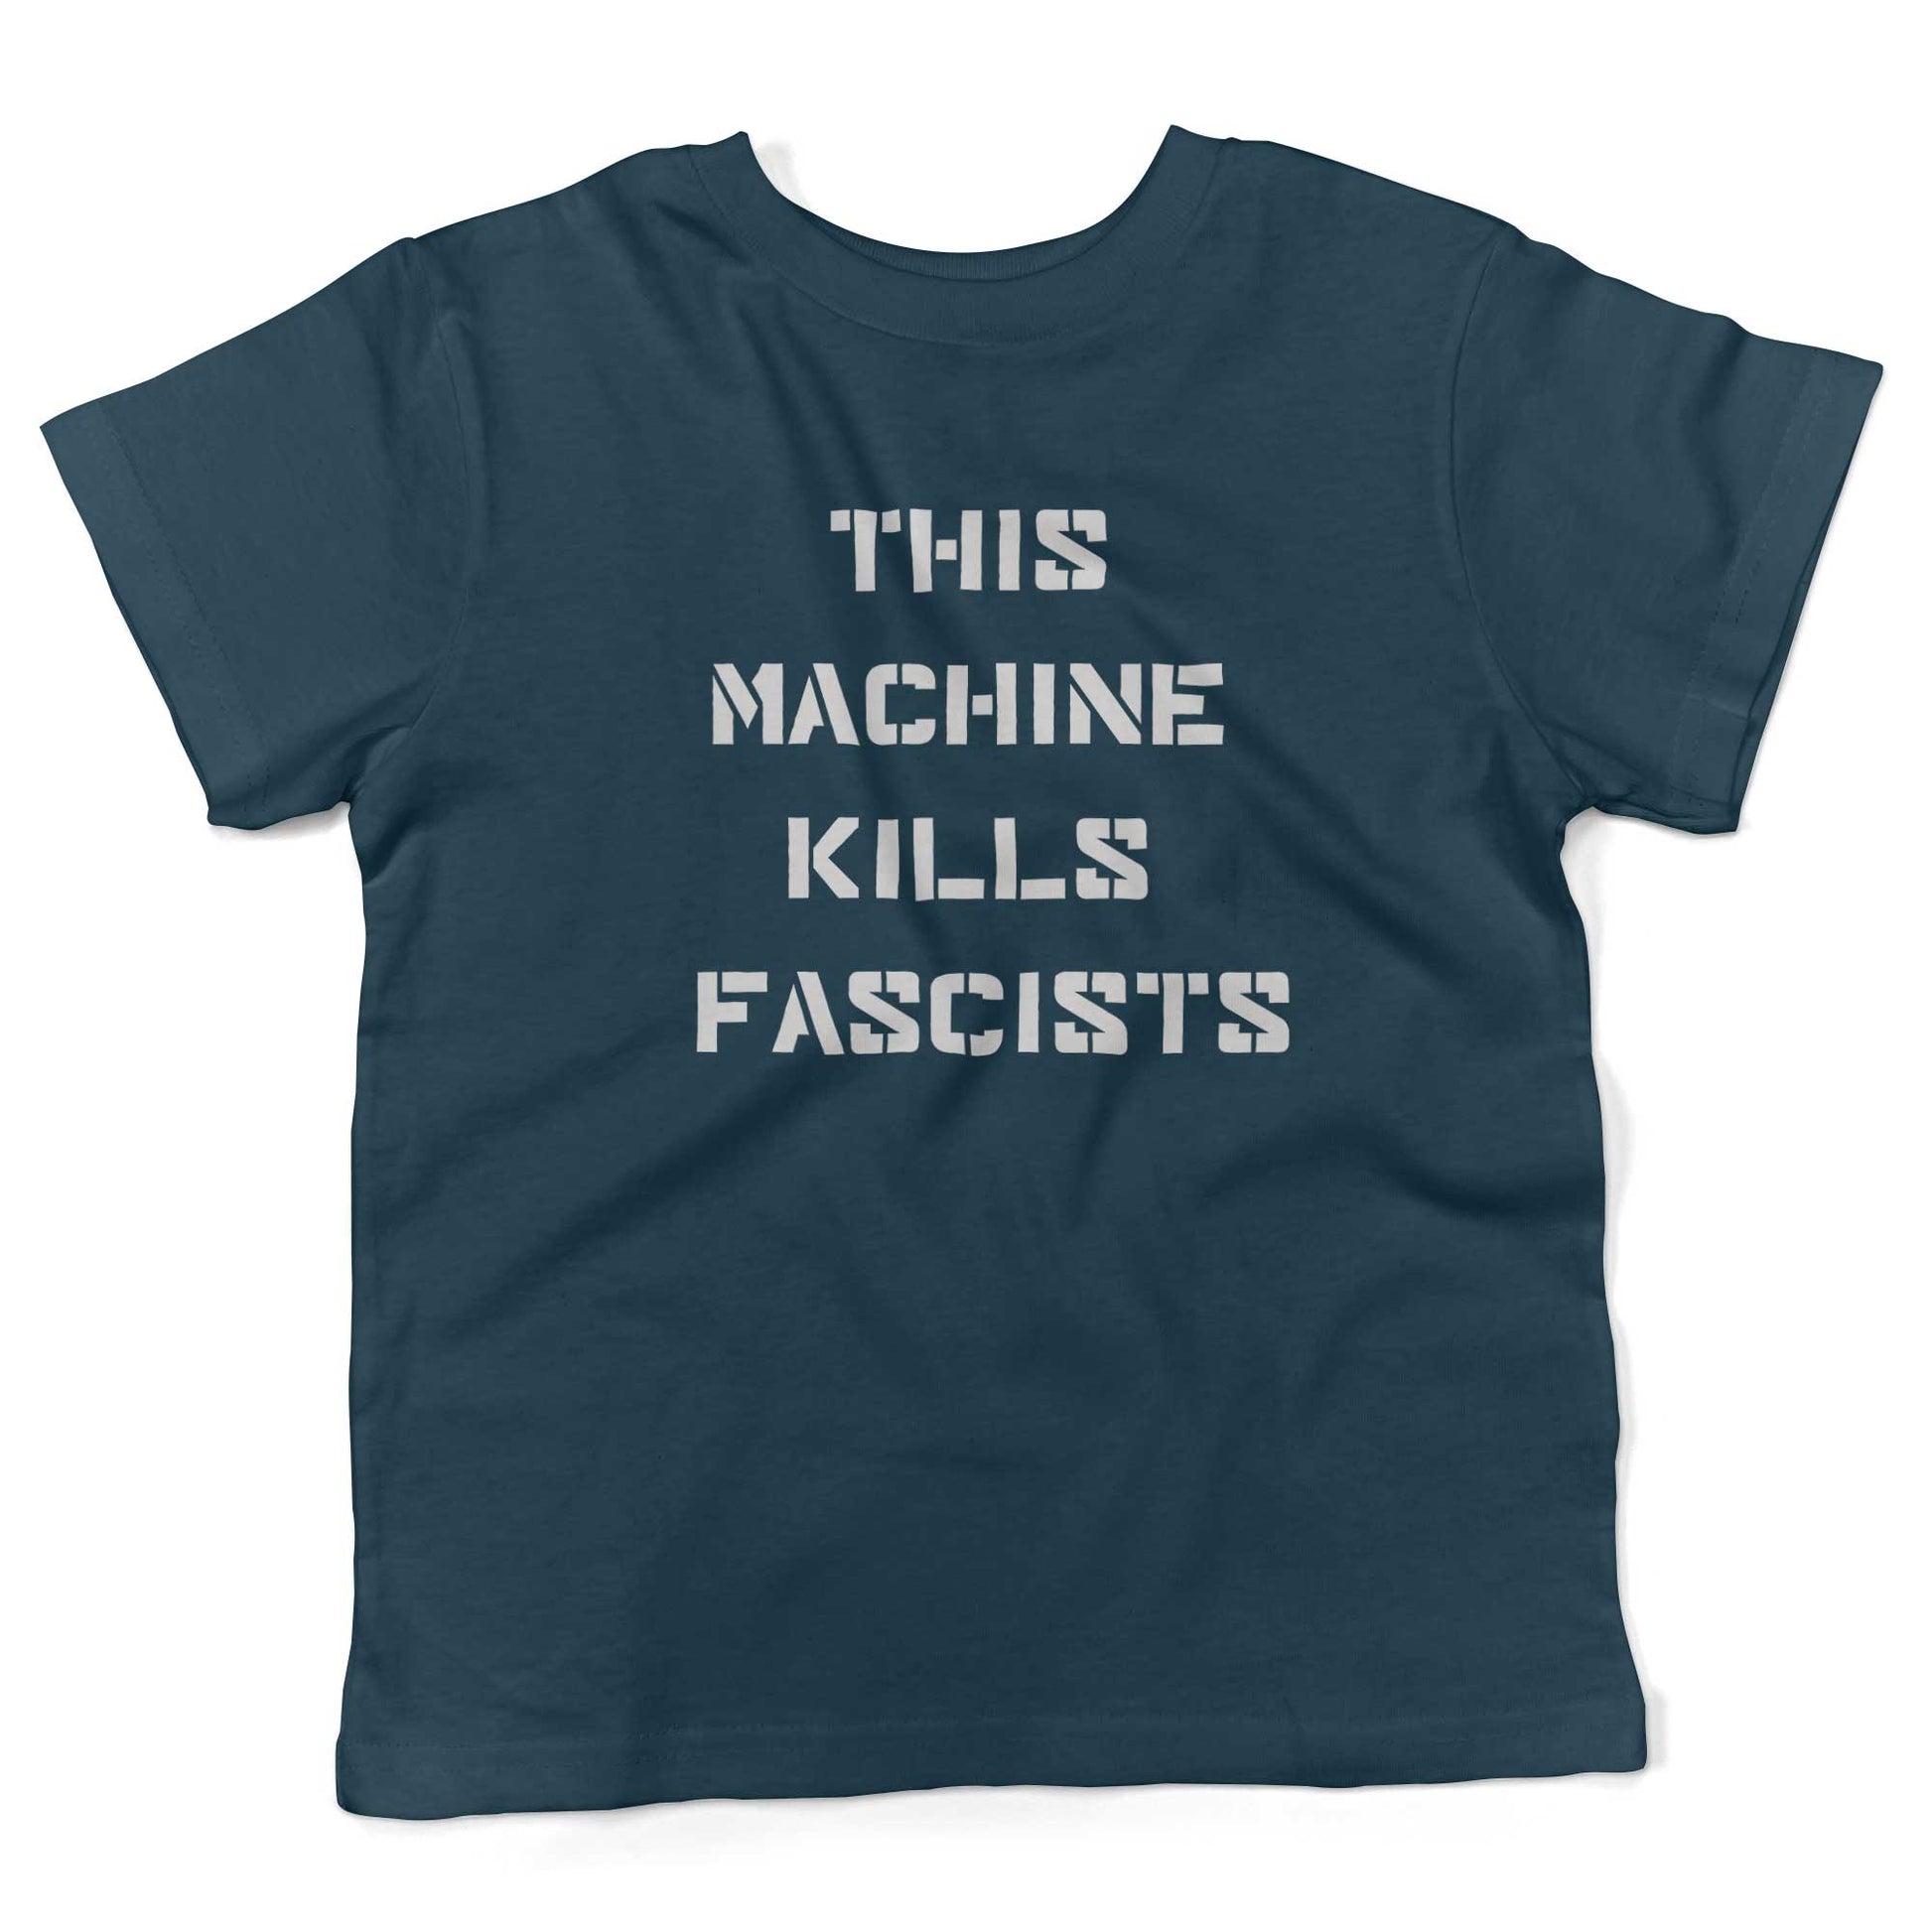 This Machine Kills Fascists Toddler Shirt-Organic Pacific Blue-2T